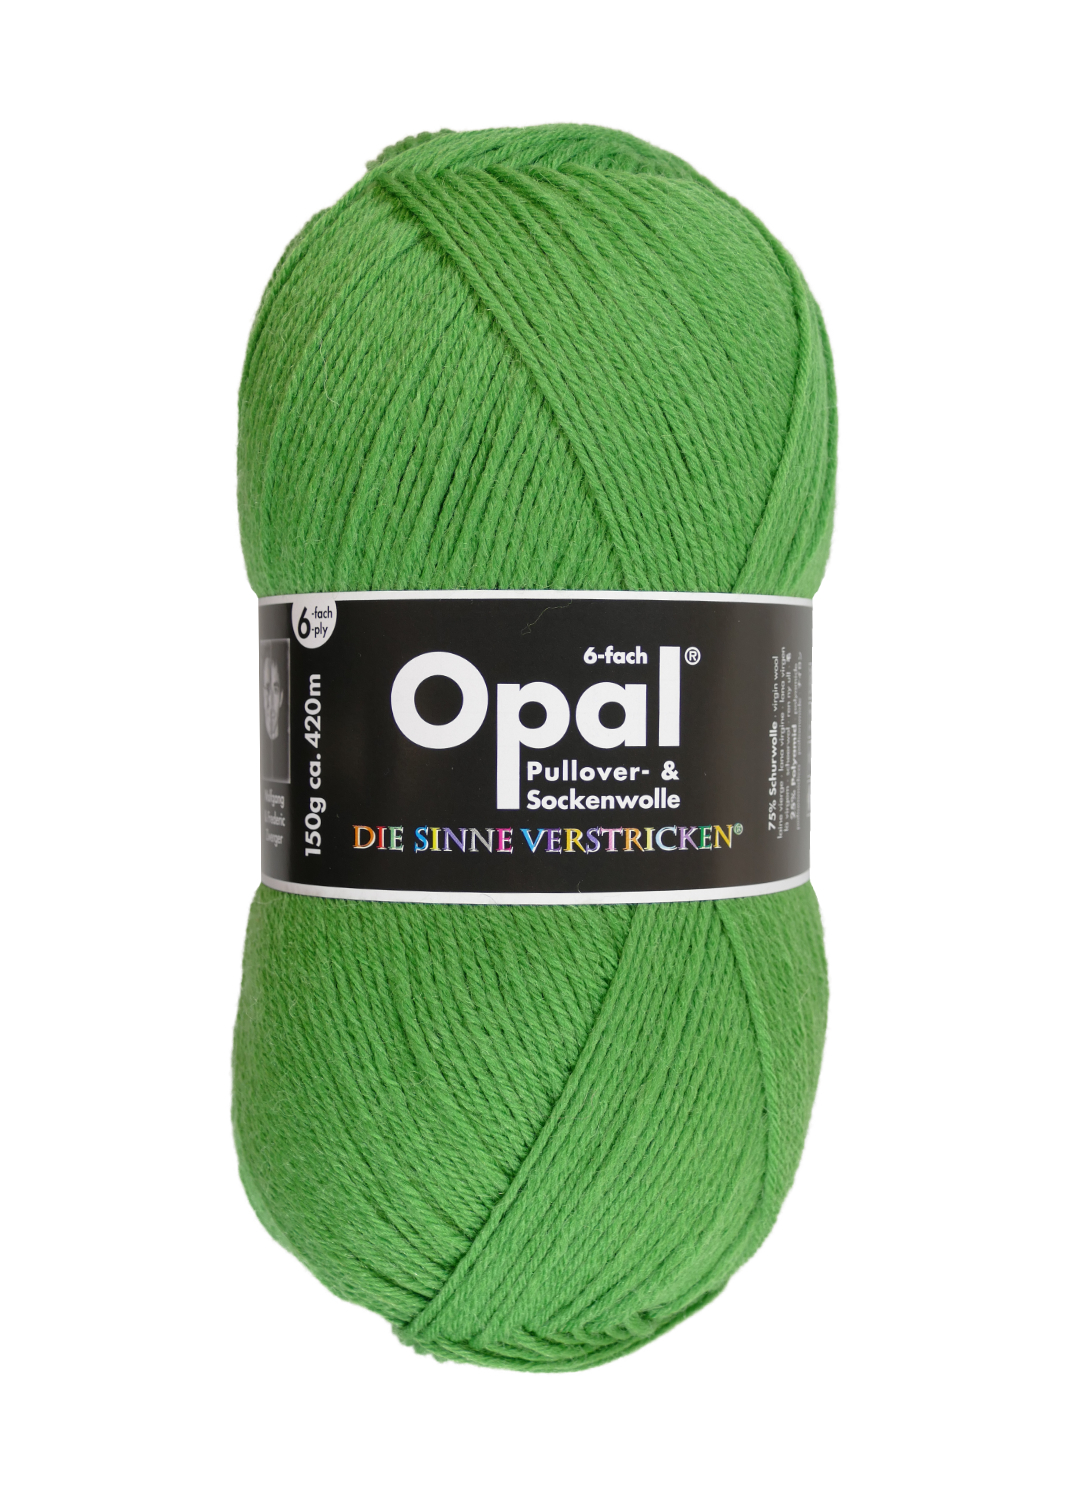 OPAL Uni - 6-fach Sockenwolle 7903 - grasgrün